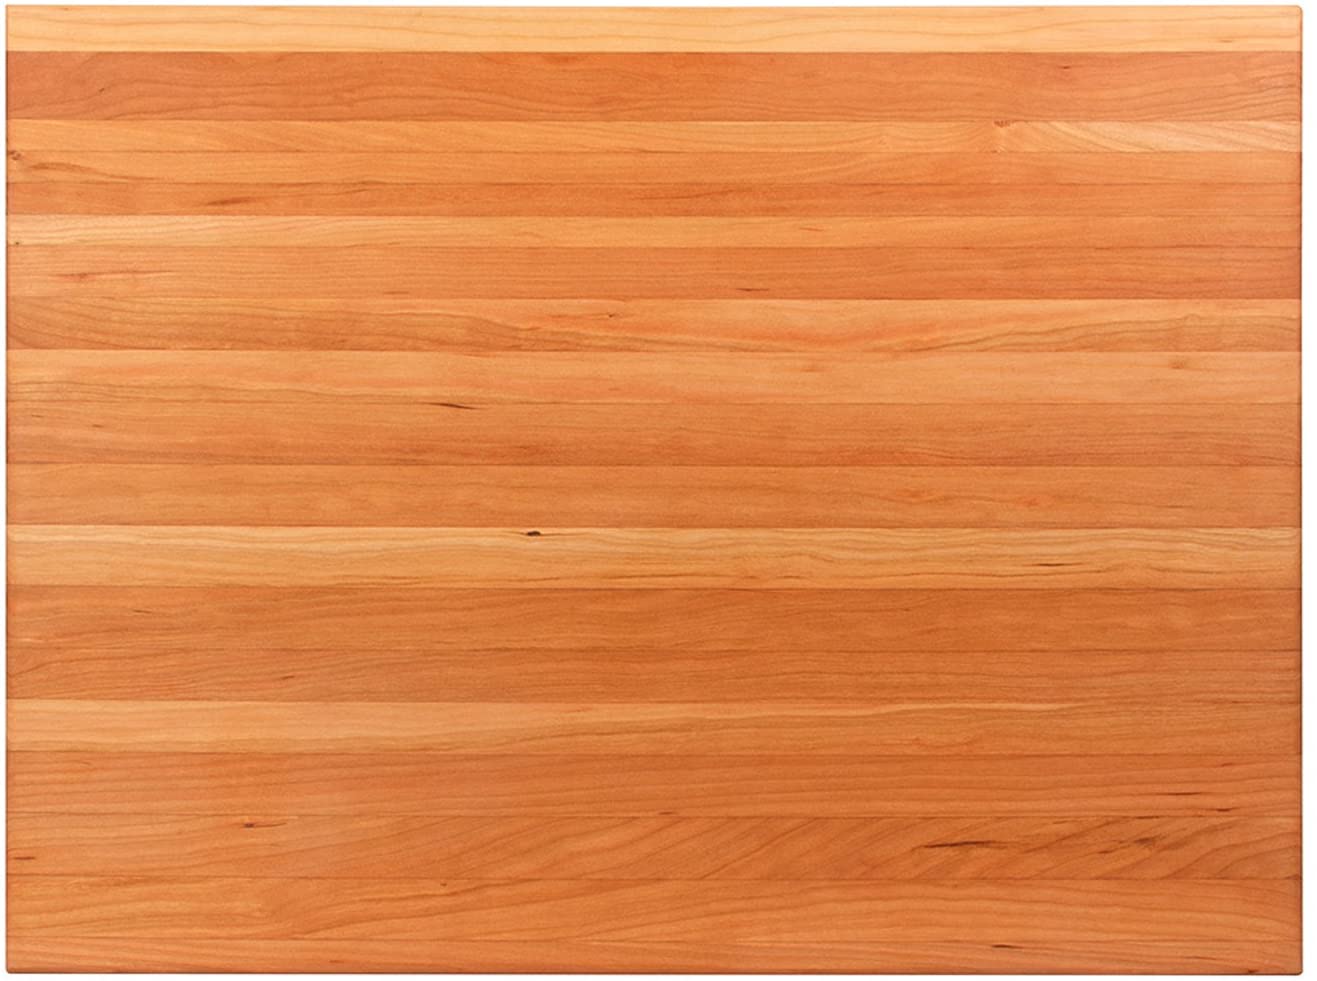 Tabla de corte en madera de arce 60 x 45 x 3.7 cm - John Boos